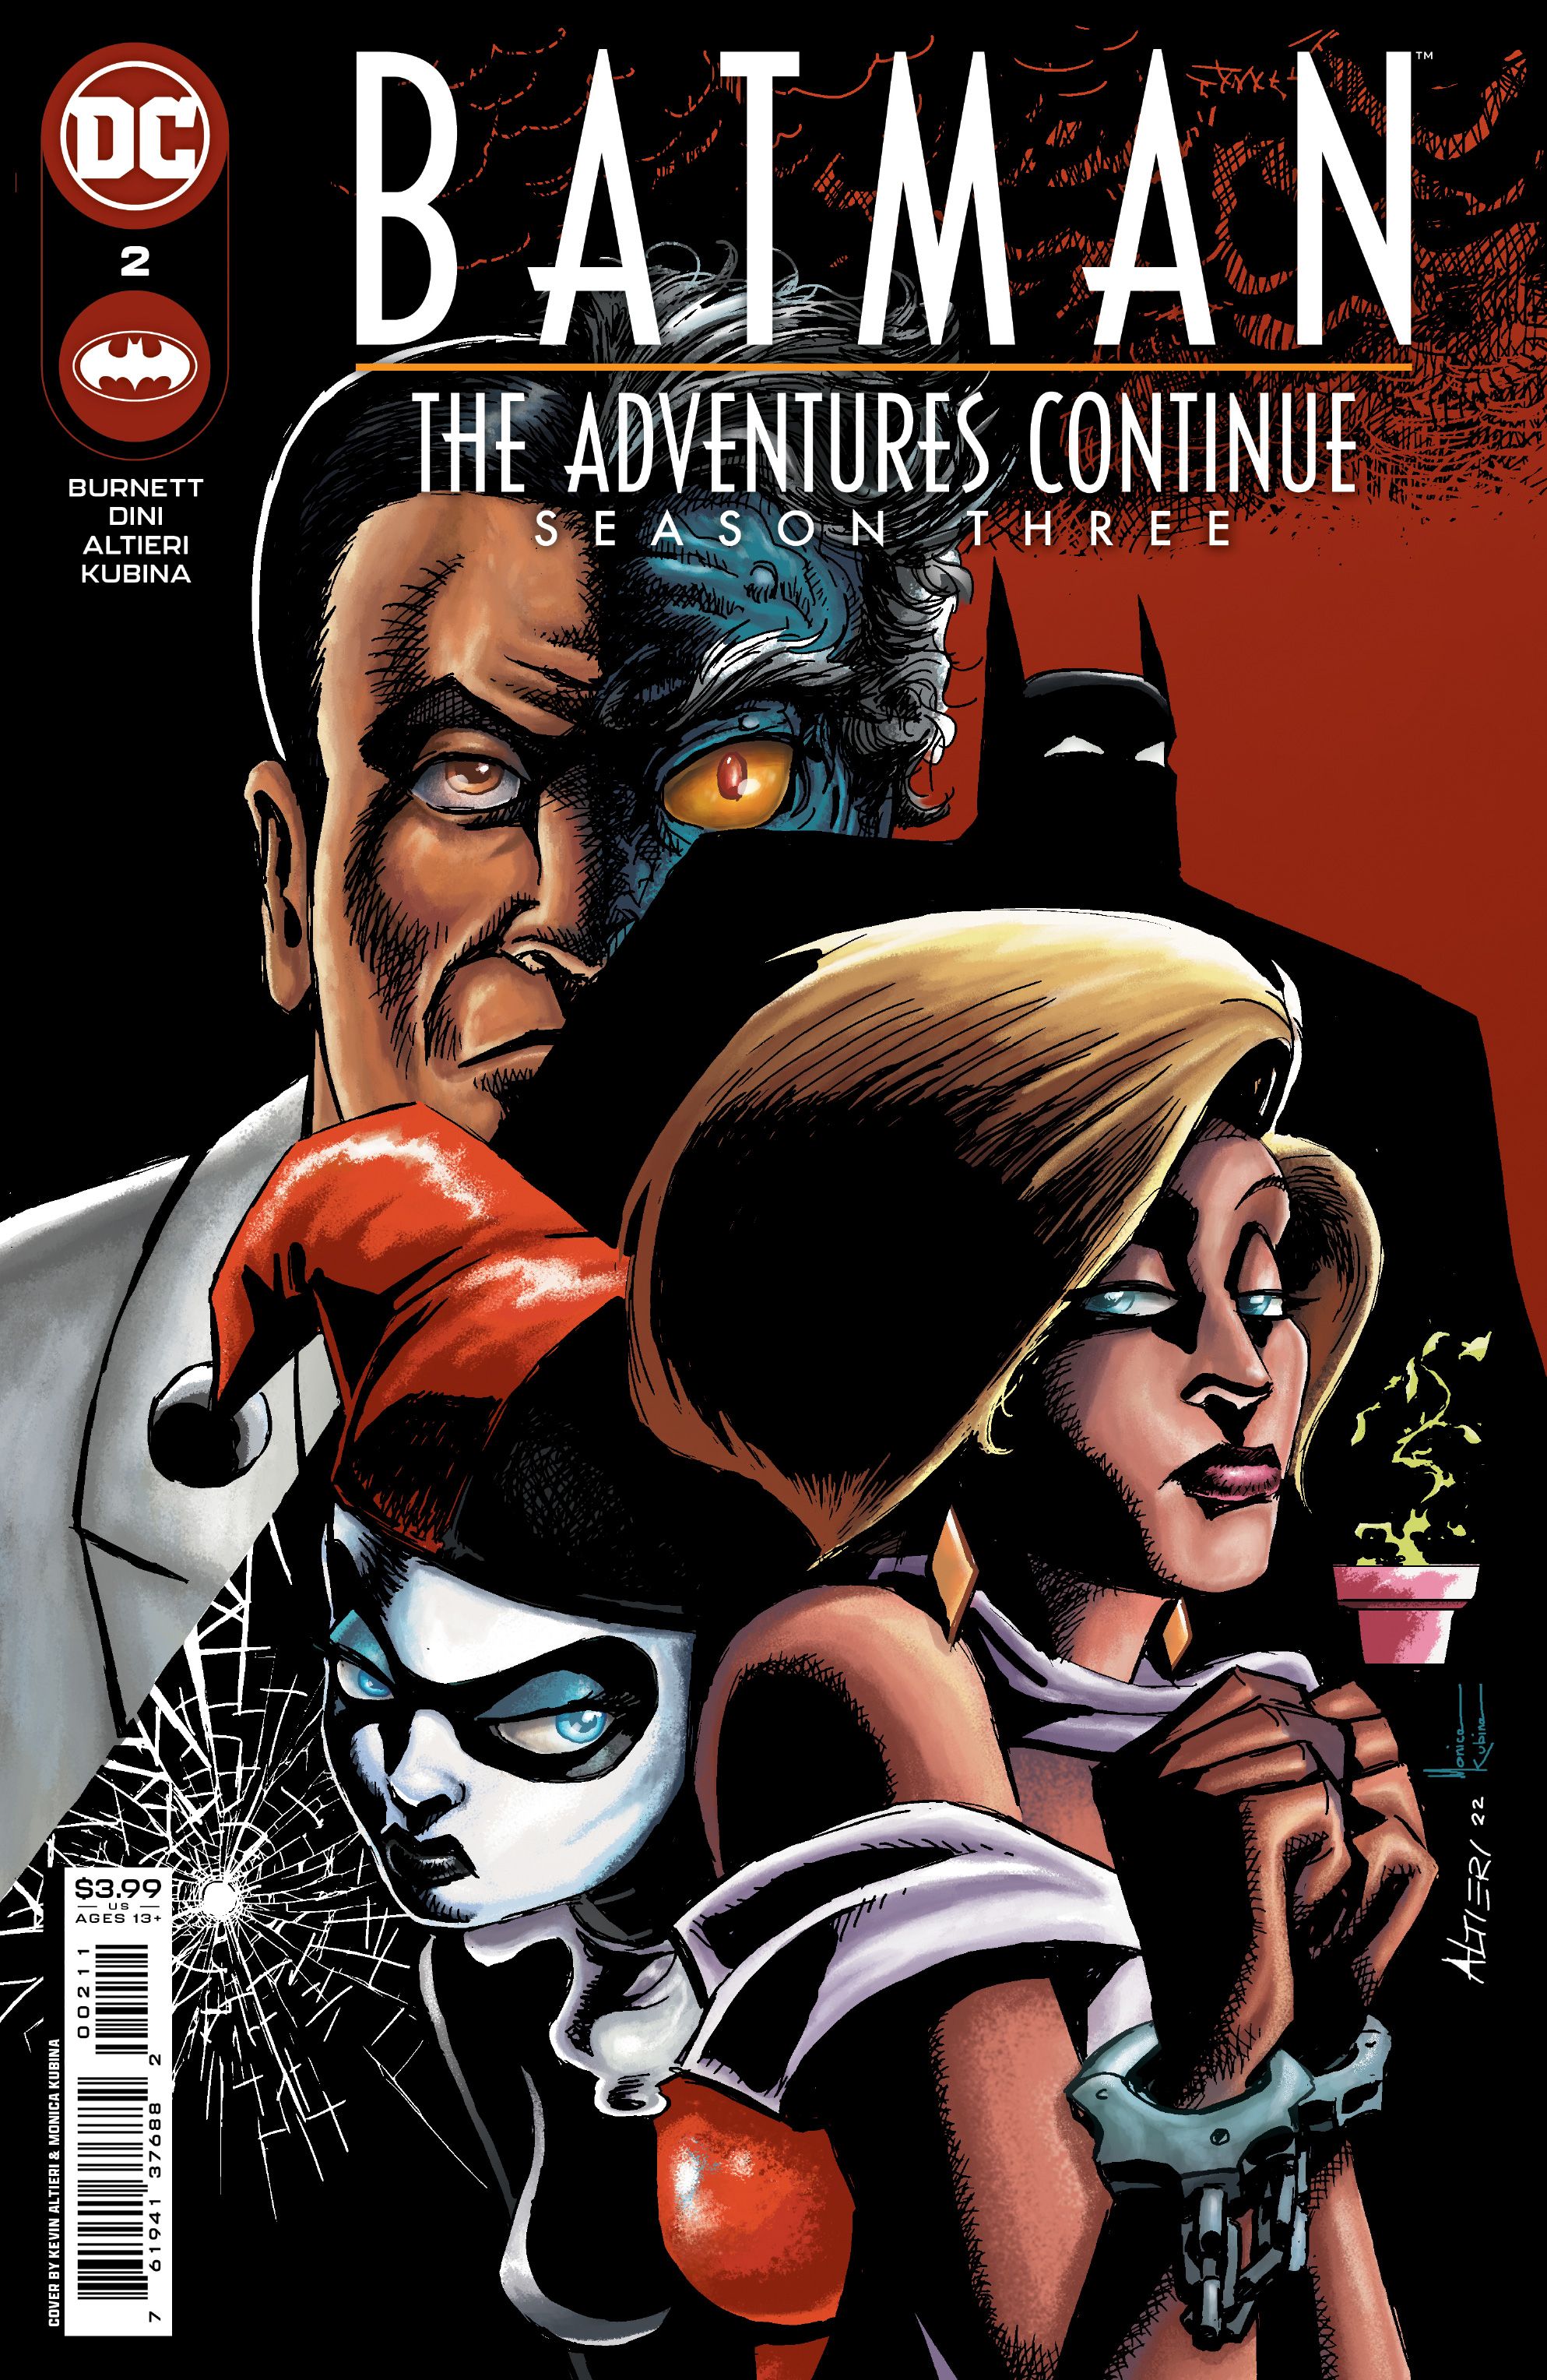 Batman The Adventures Continue Season Three #2 Cover